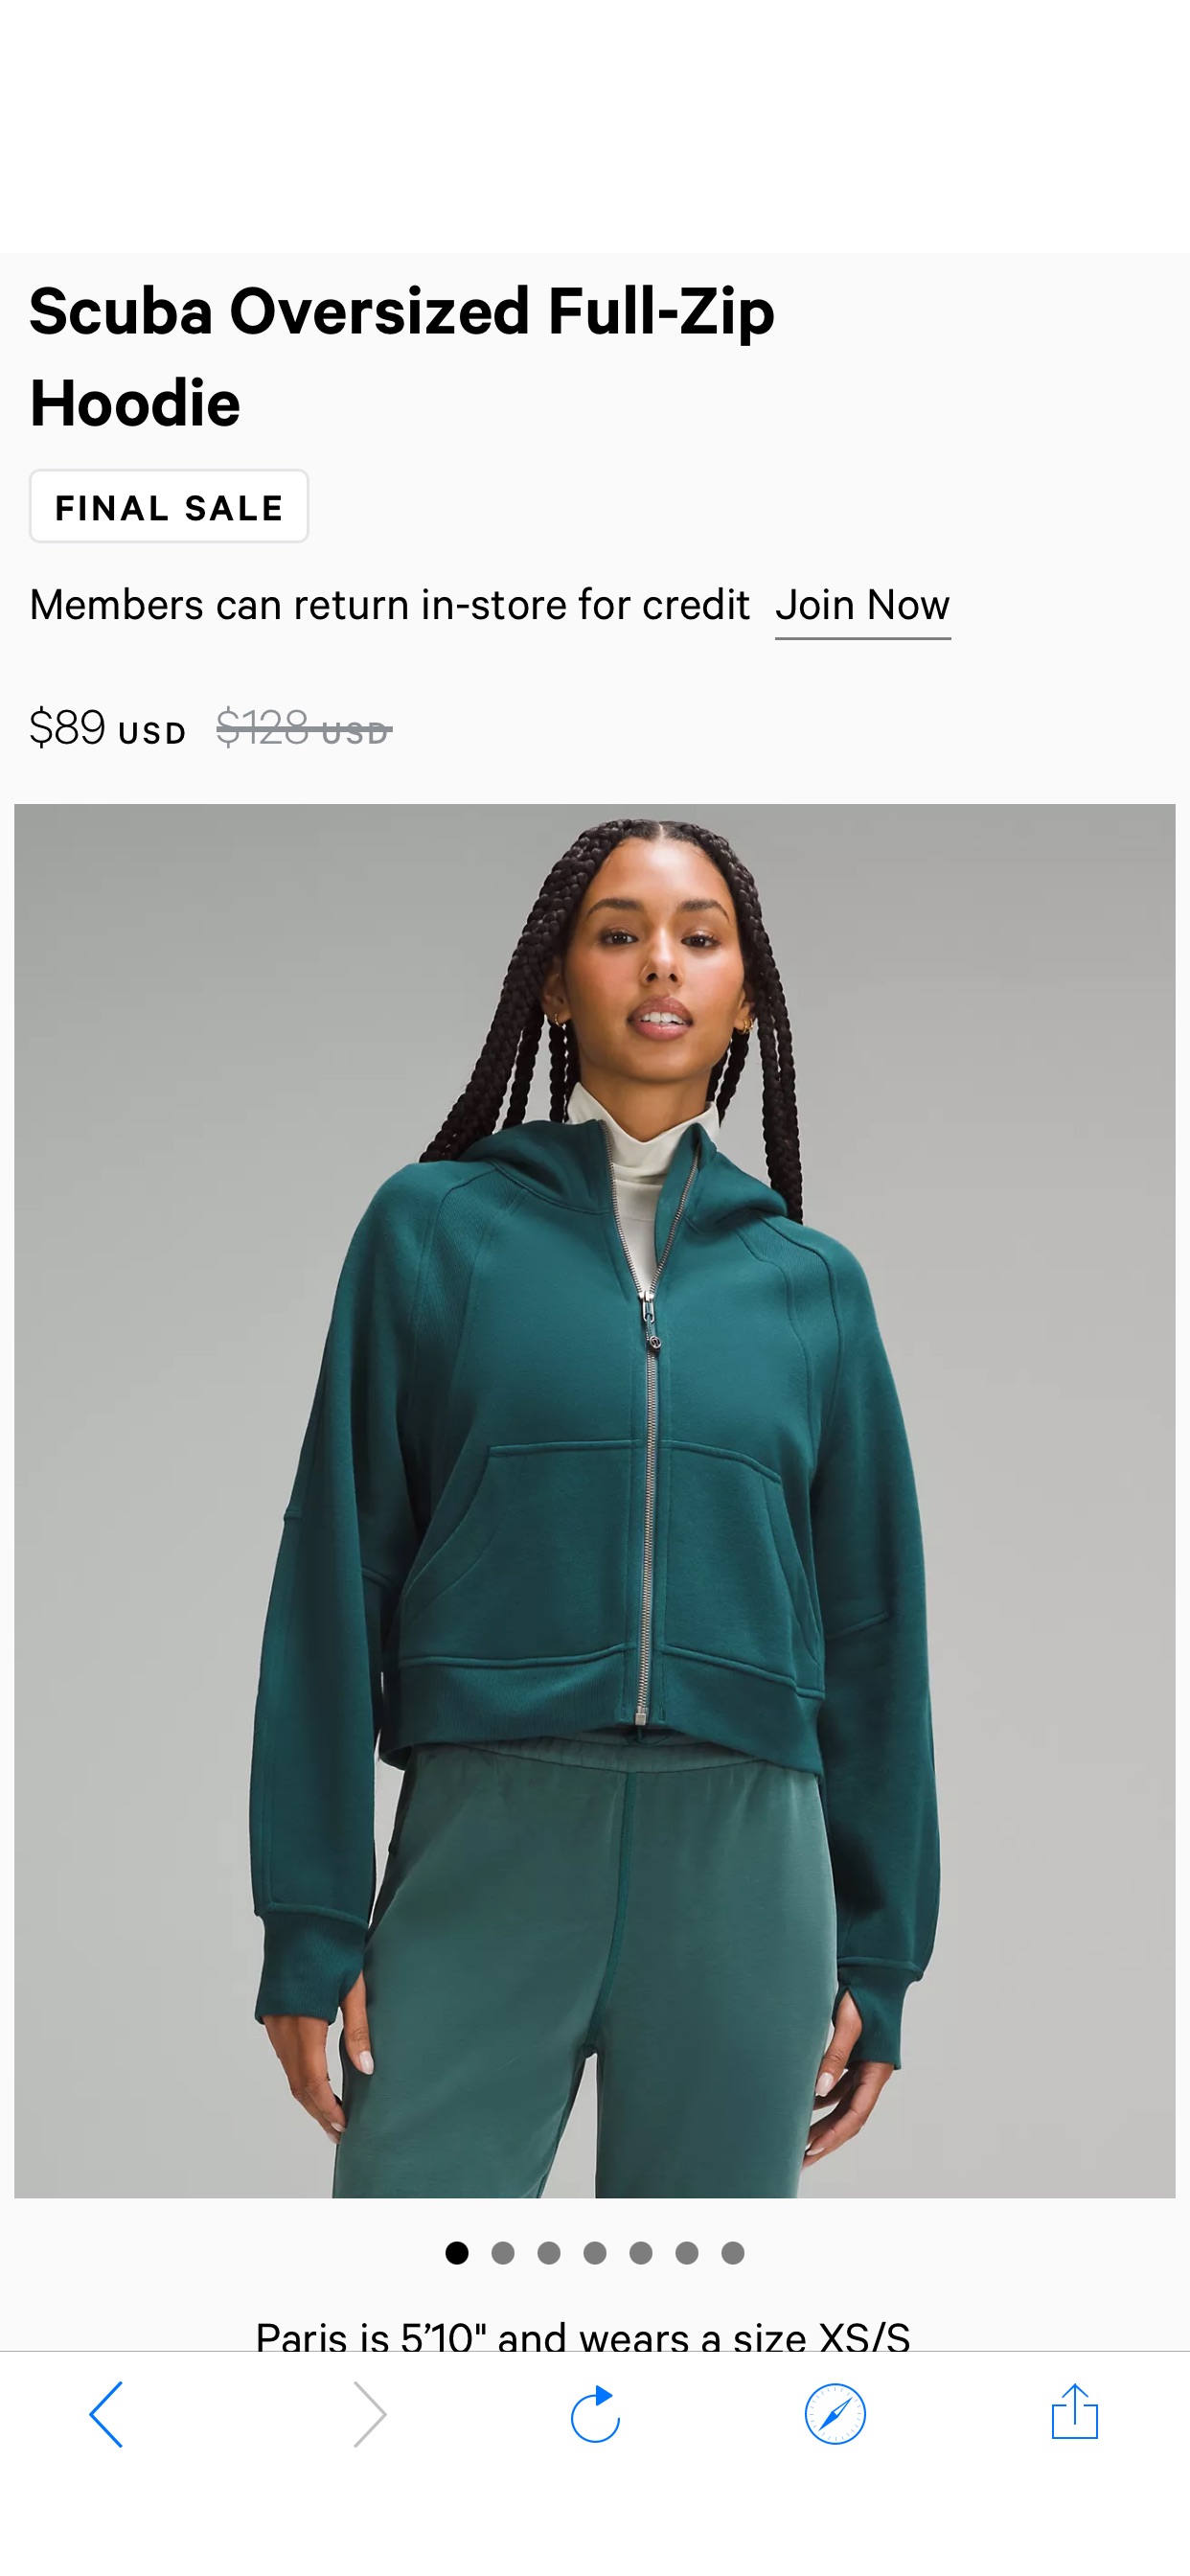 Scuba Oversized Full-Zip Hoodie | Women's Hoodies & Sweatshirts | lululemon Scuba Oversized Full-Zip Hoodie
原價128，現在才89，墨绿色 碼全